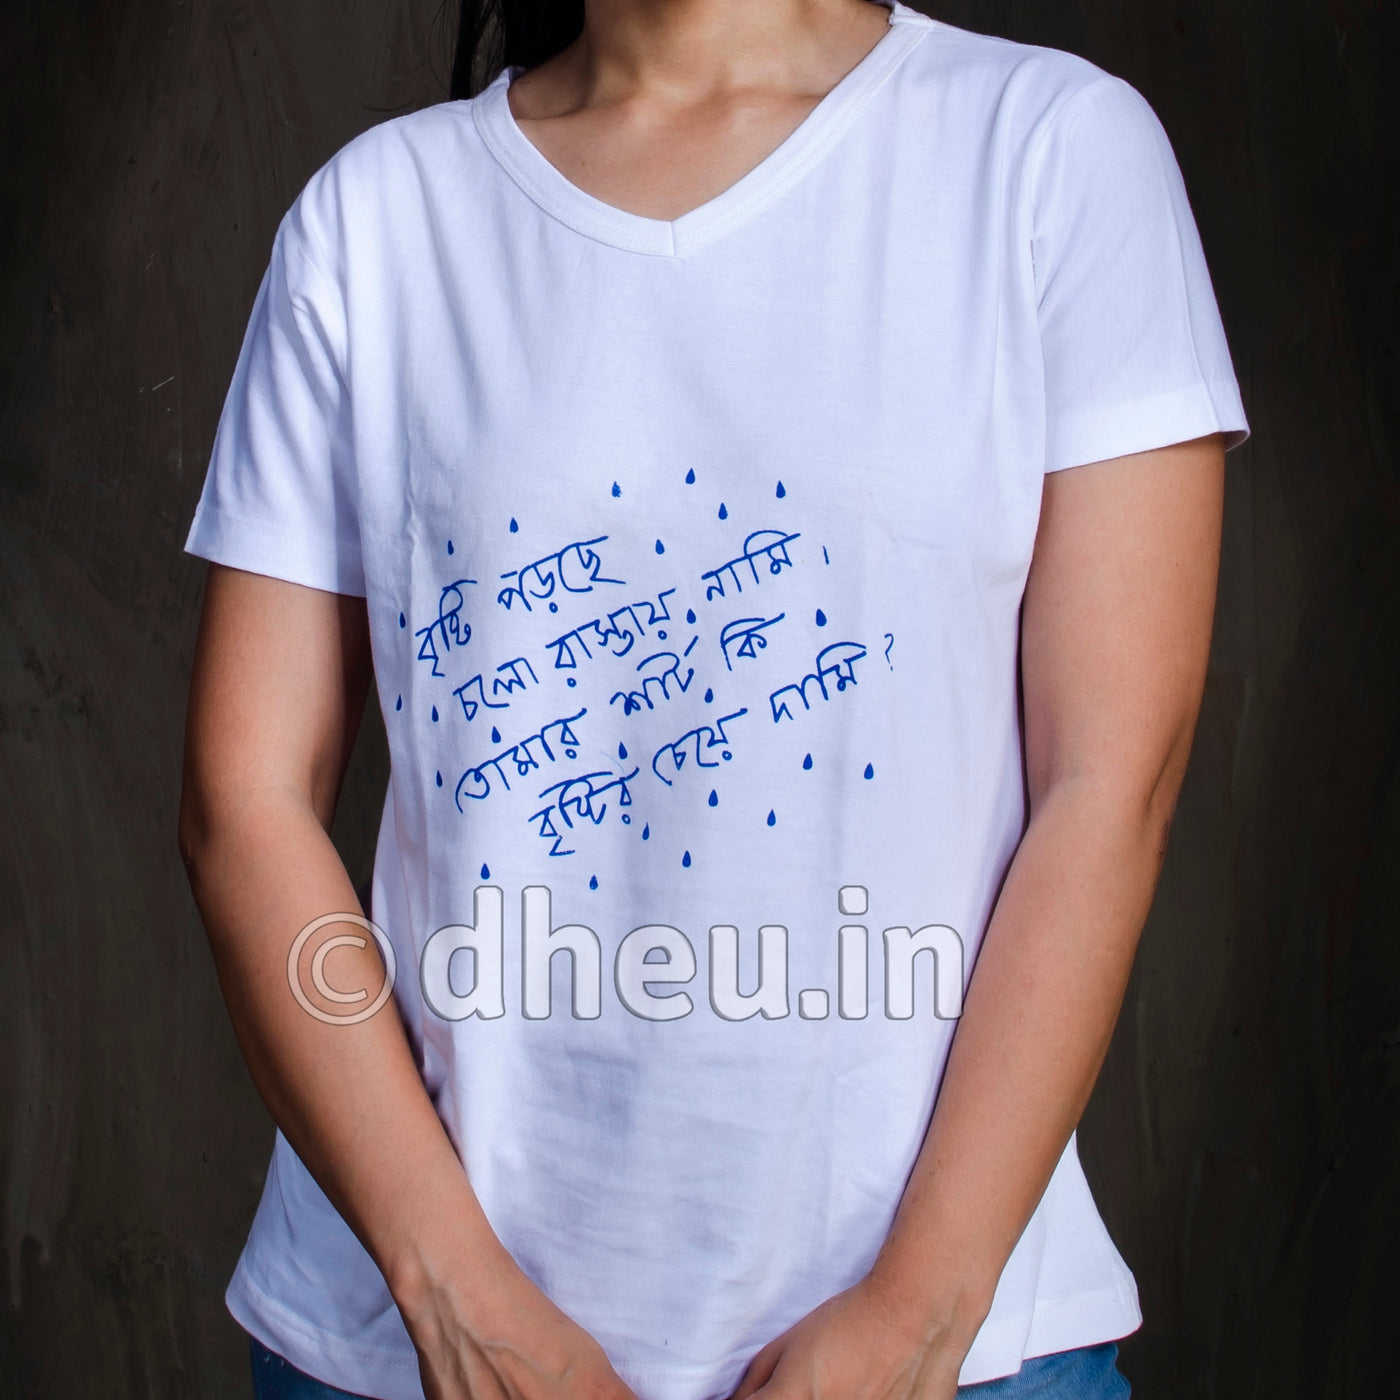 T Shirt-Bengali quotes - Boutique Dheu